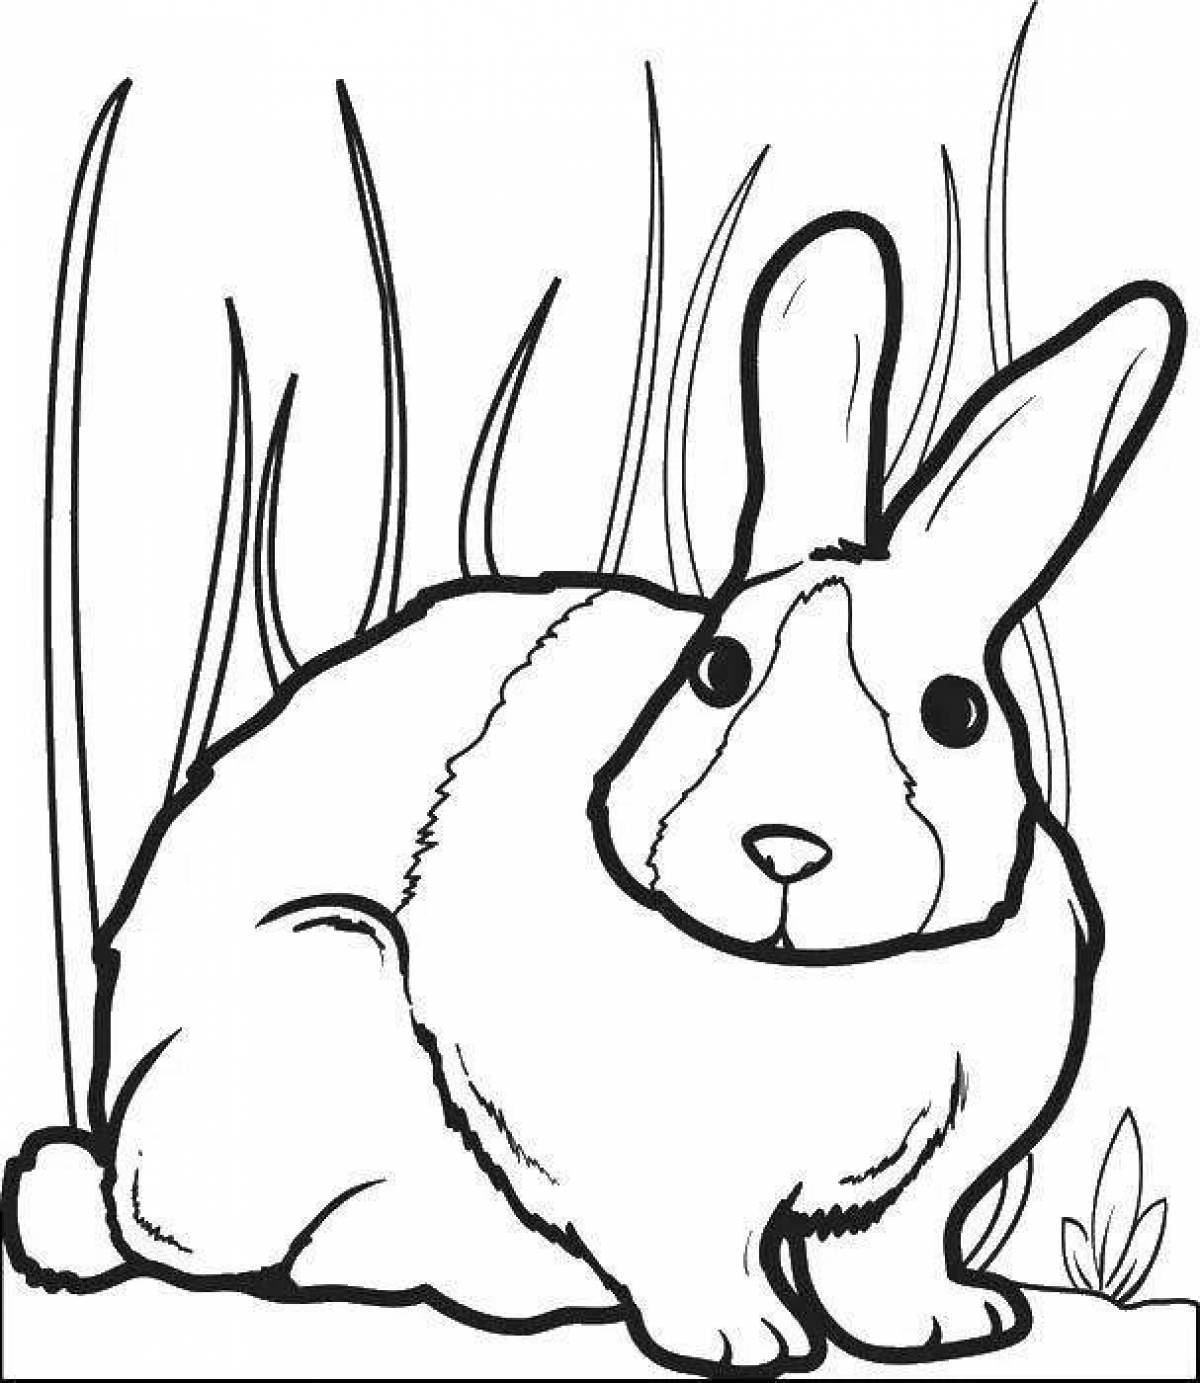 Fuzzy coloring rabbit image